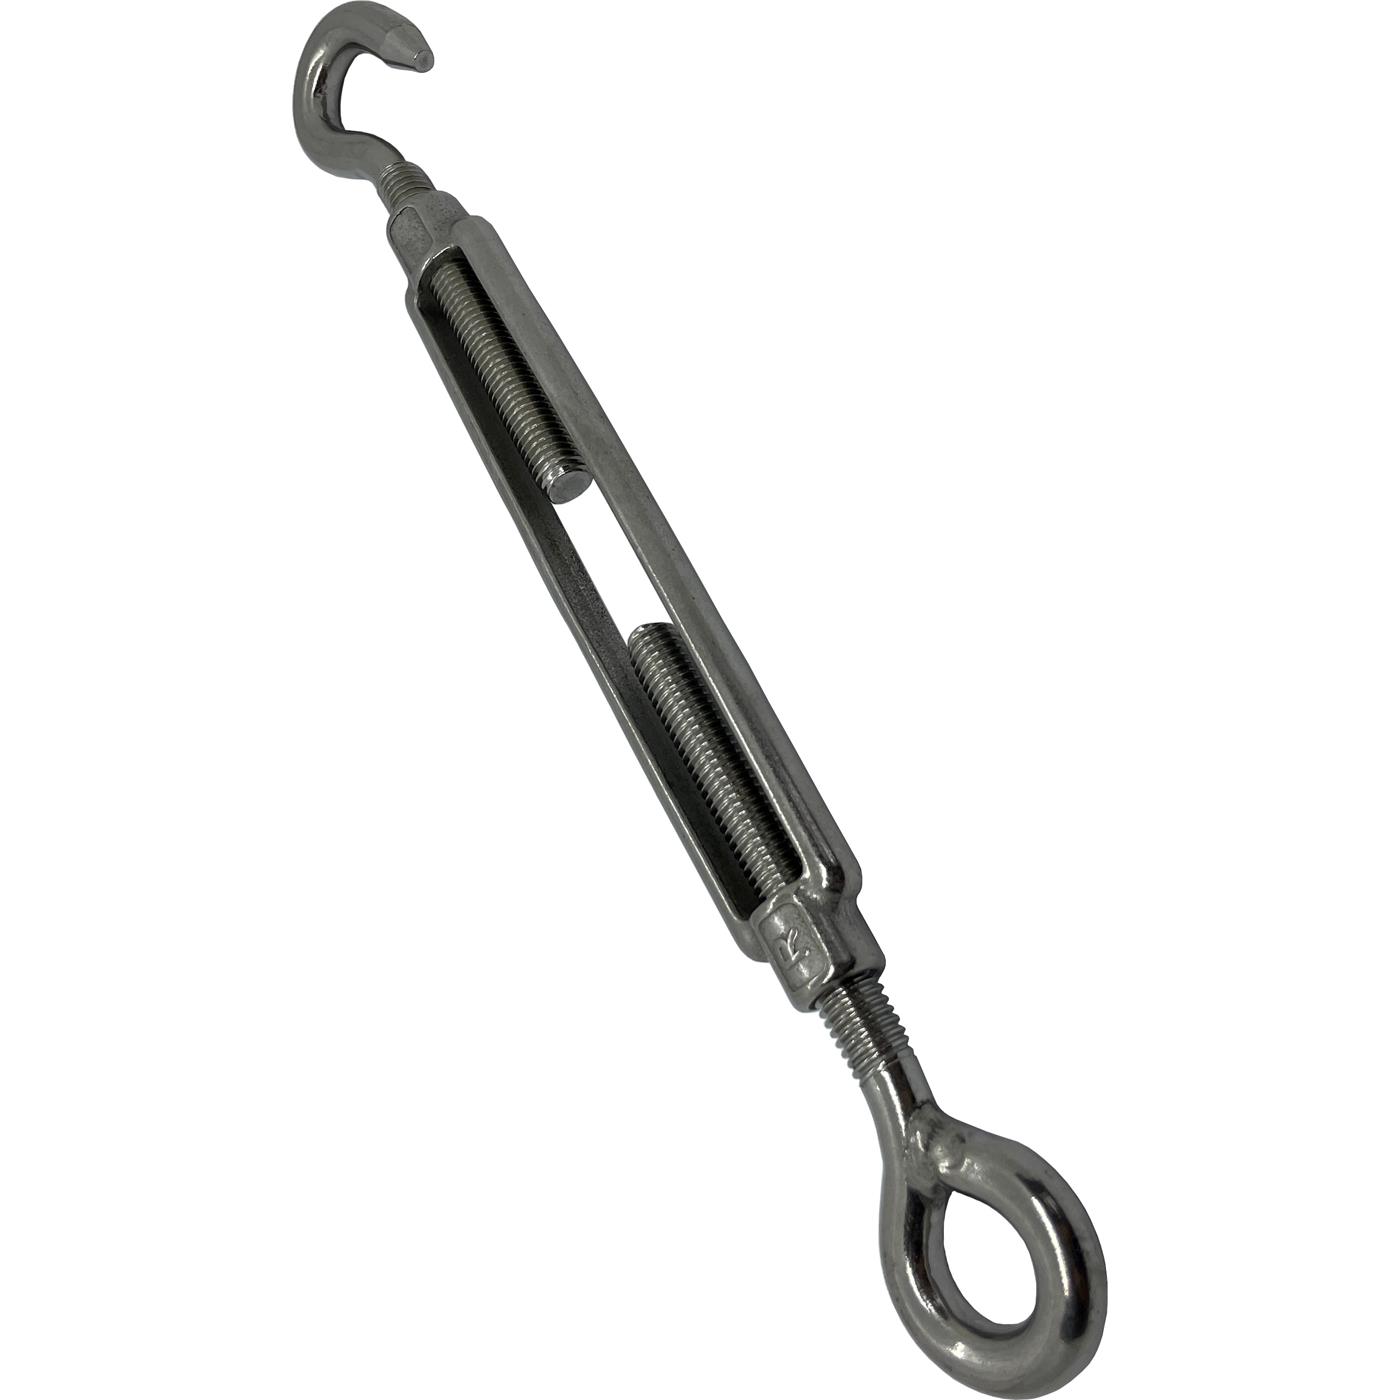 Rope tensioner Eyelet-Hook Stainless steel V2A 304 M4 Turnbuckle Shroud clamp